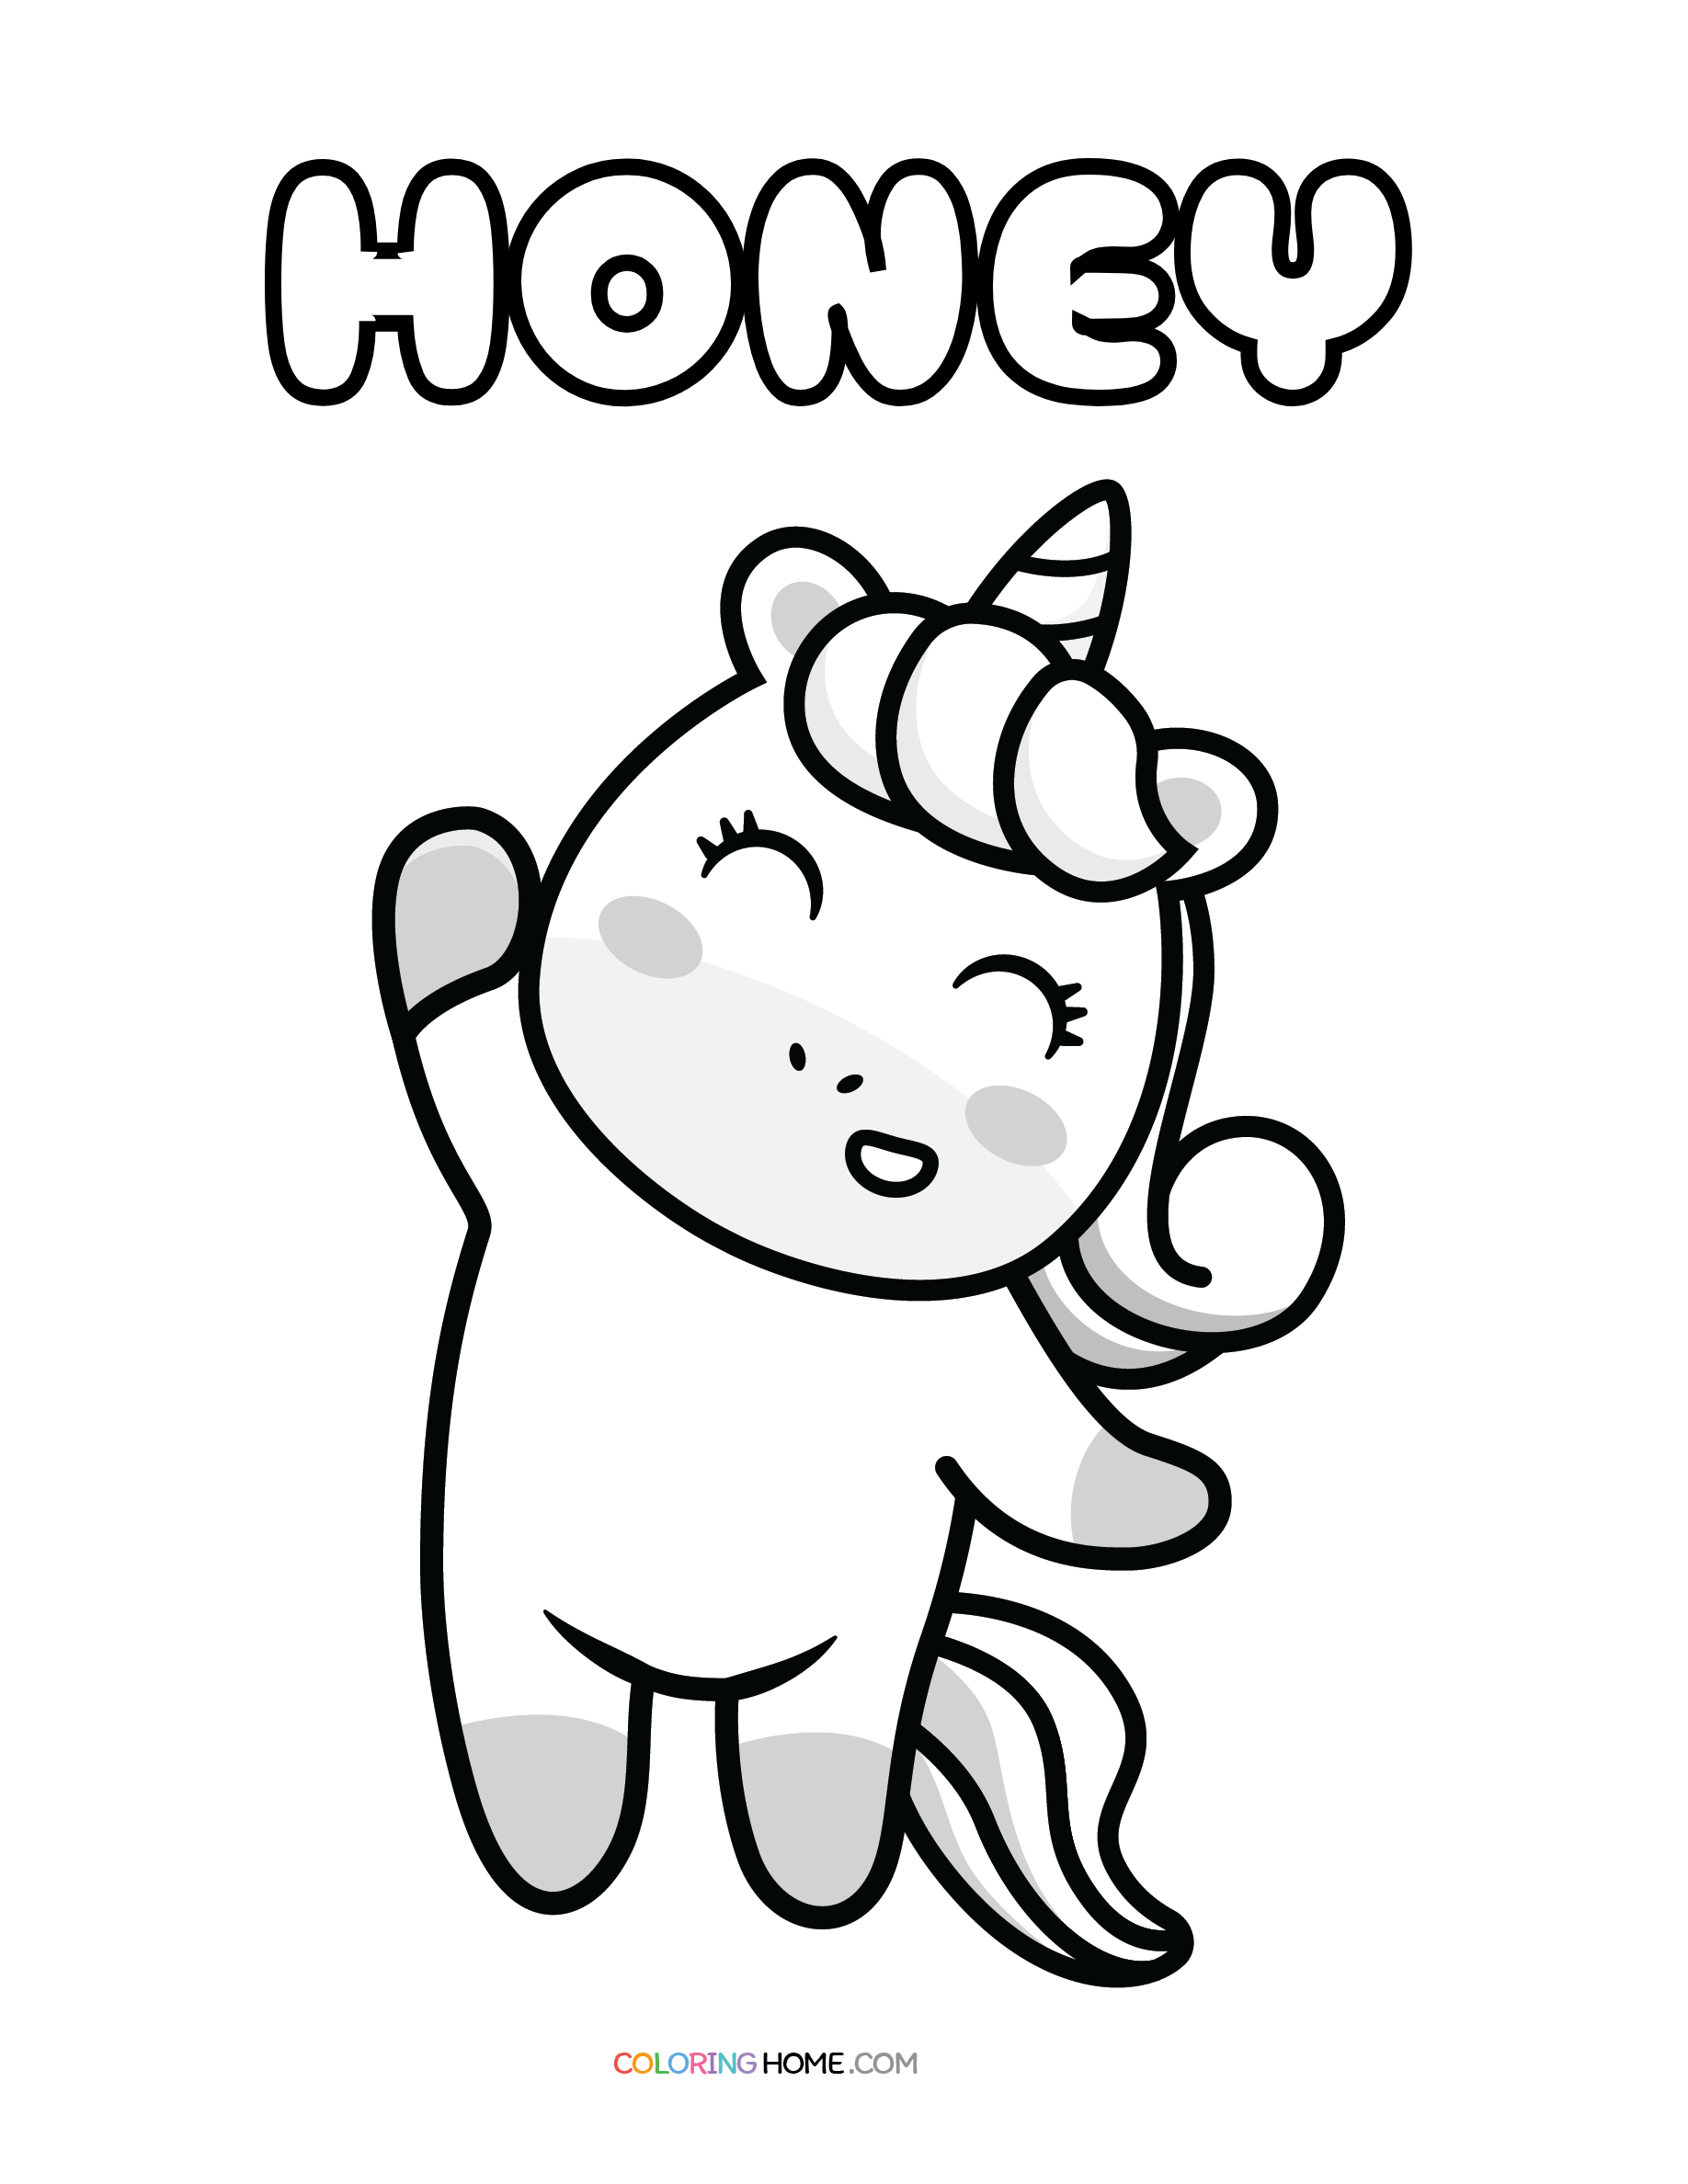 Honey unicorn coloring page